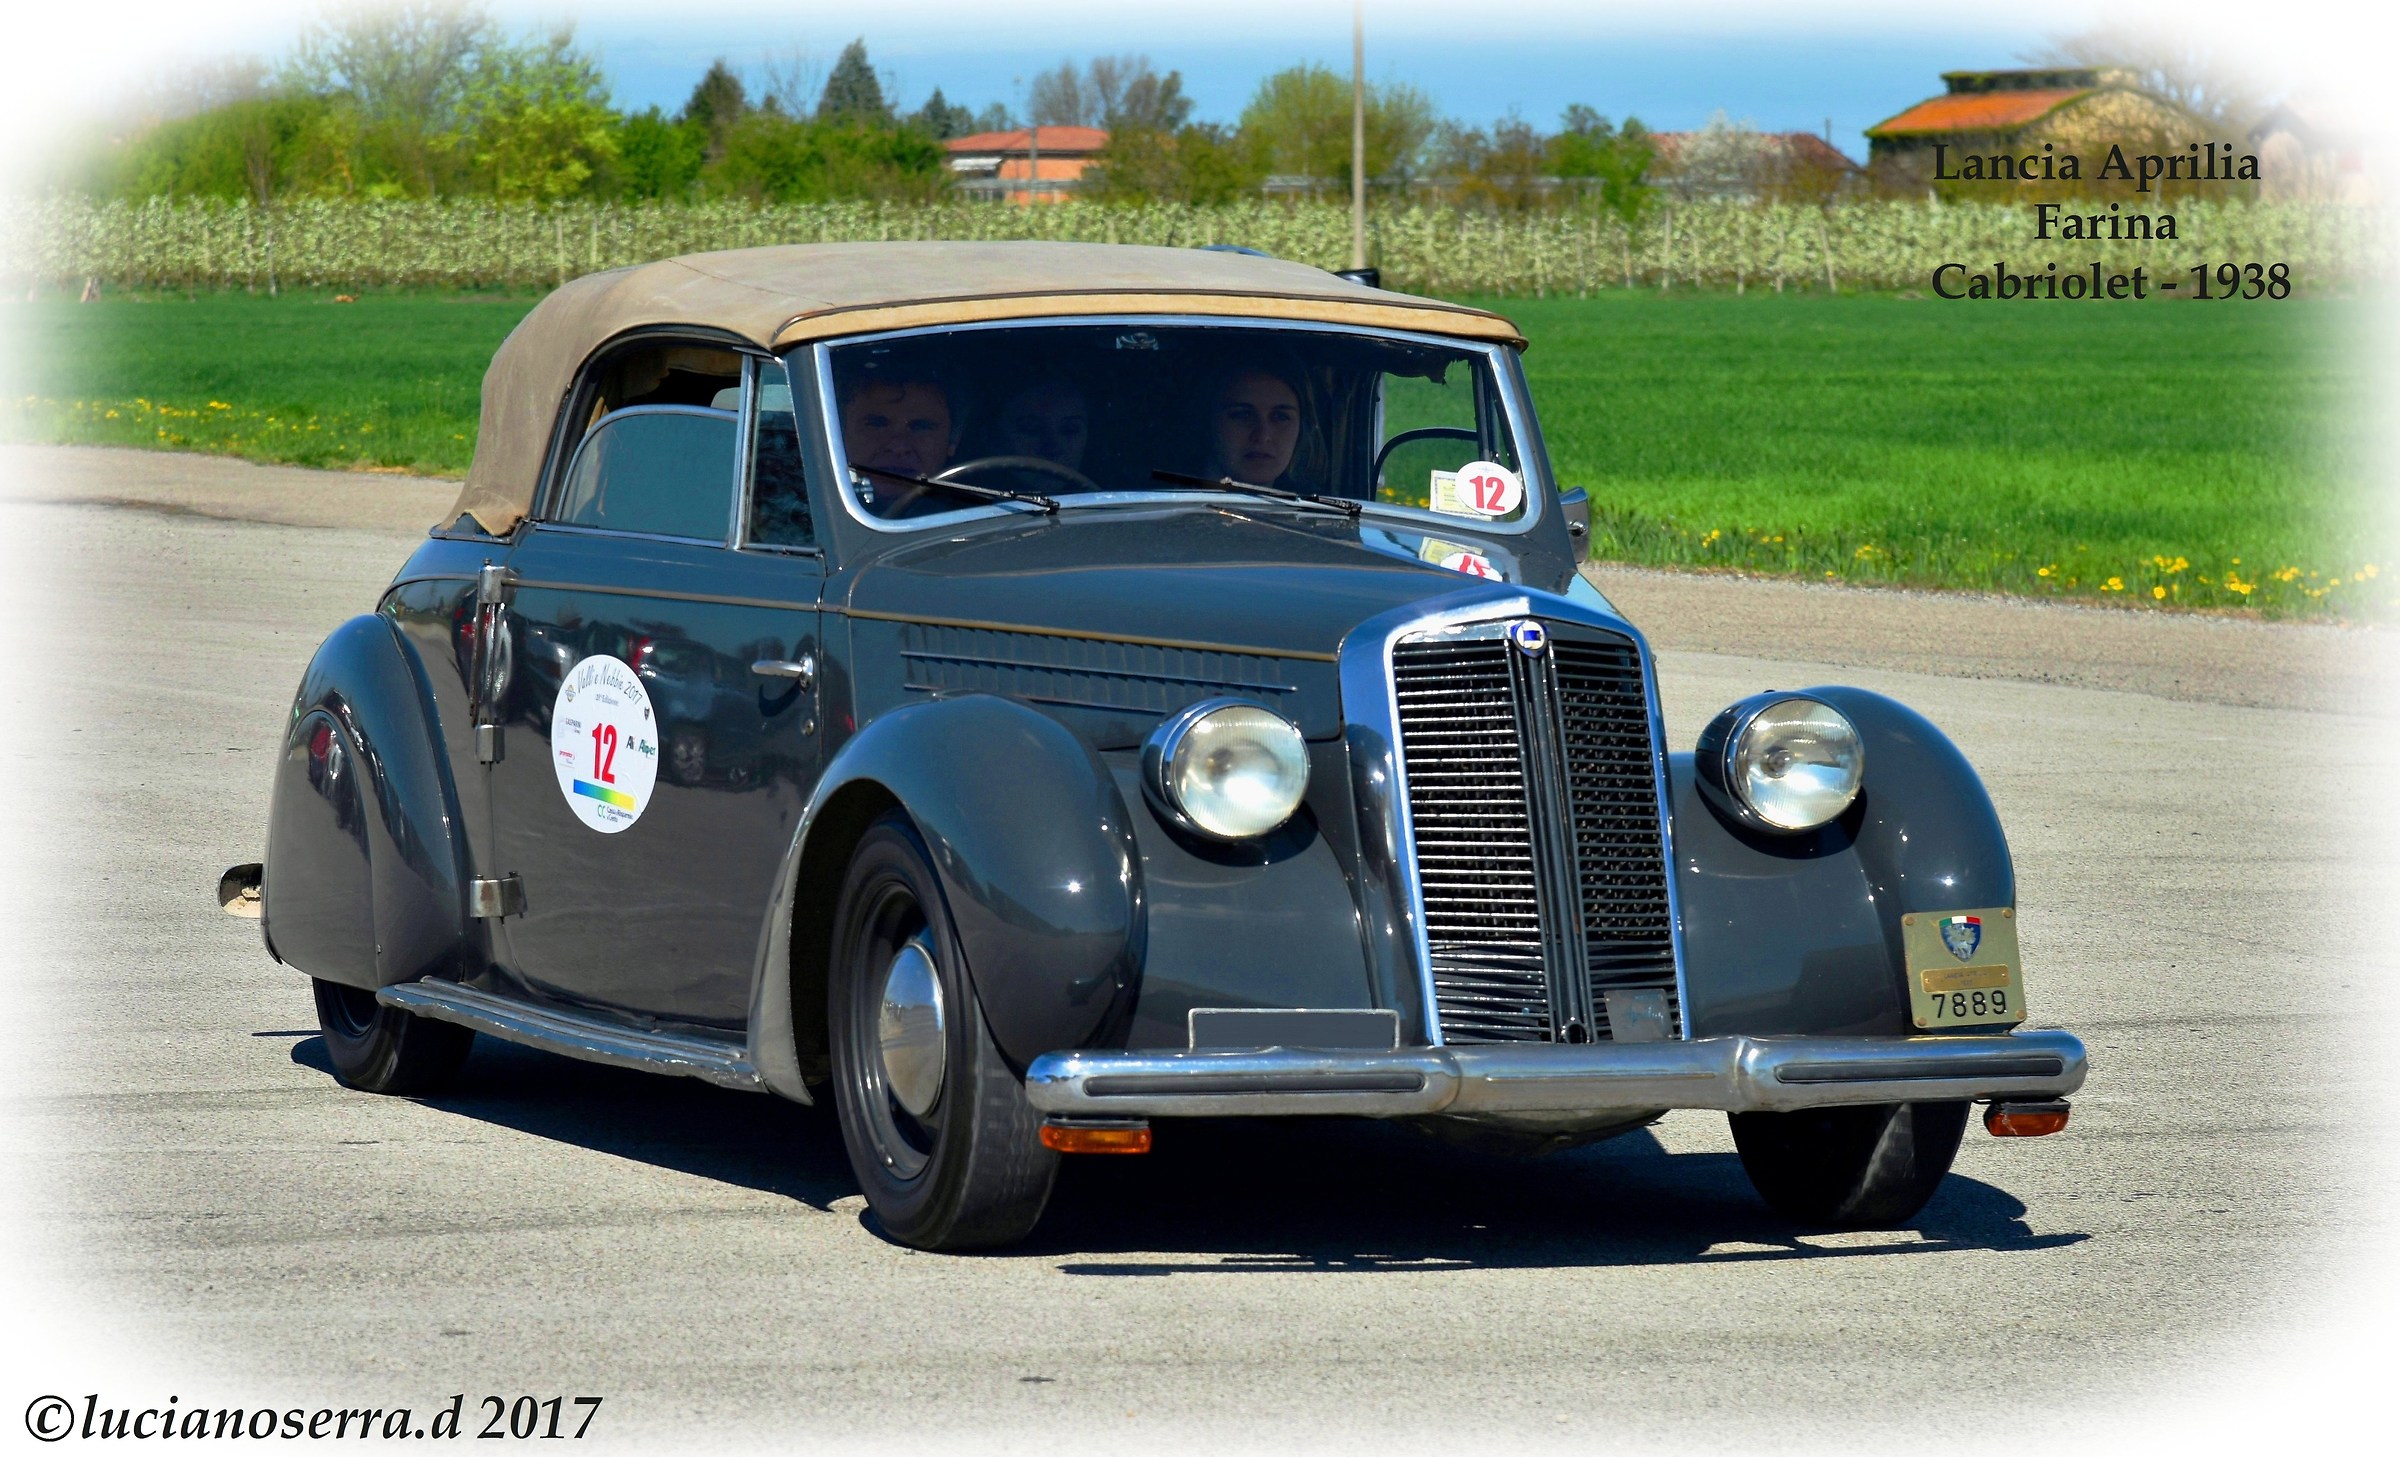 Lancia Aprilia "Farina" Cabriolet - 1938...